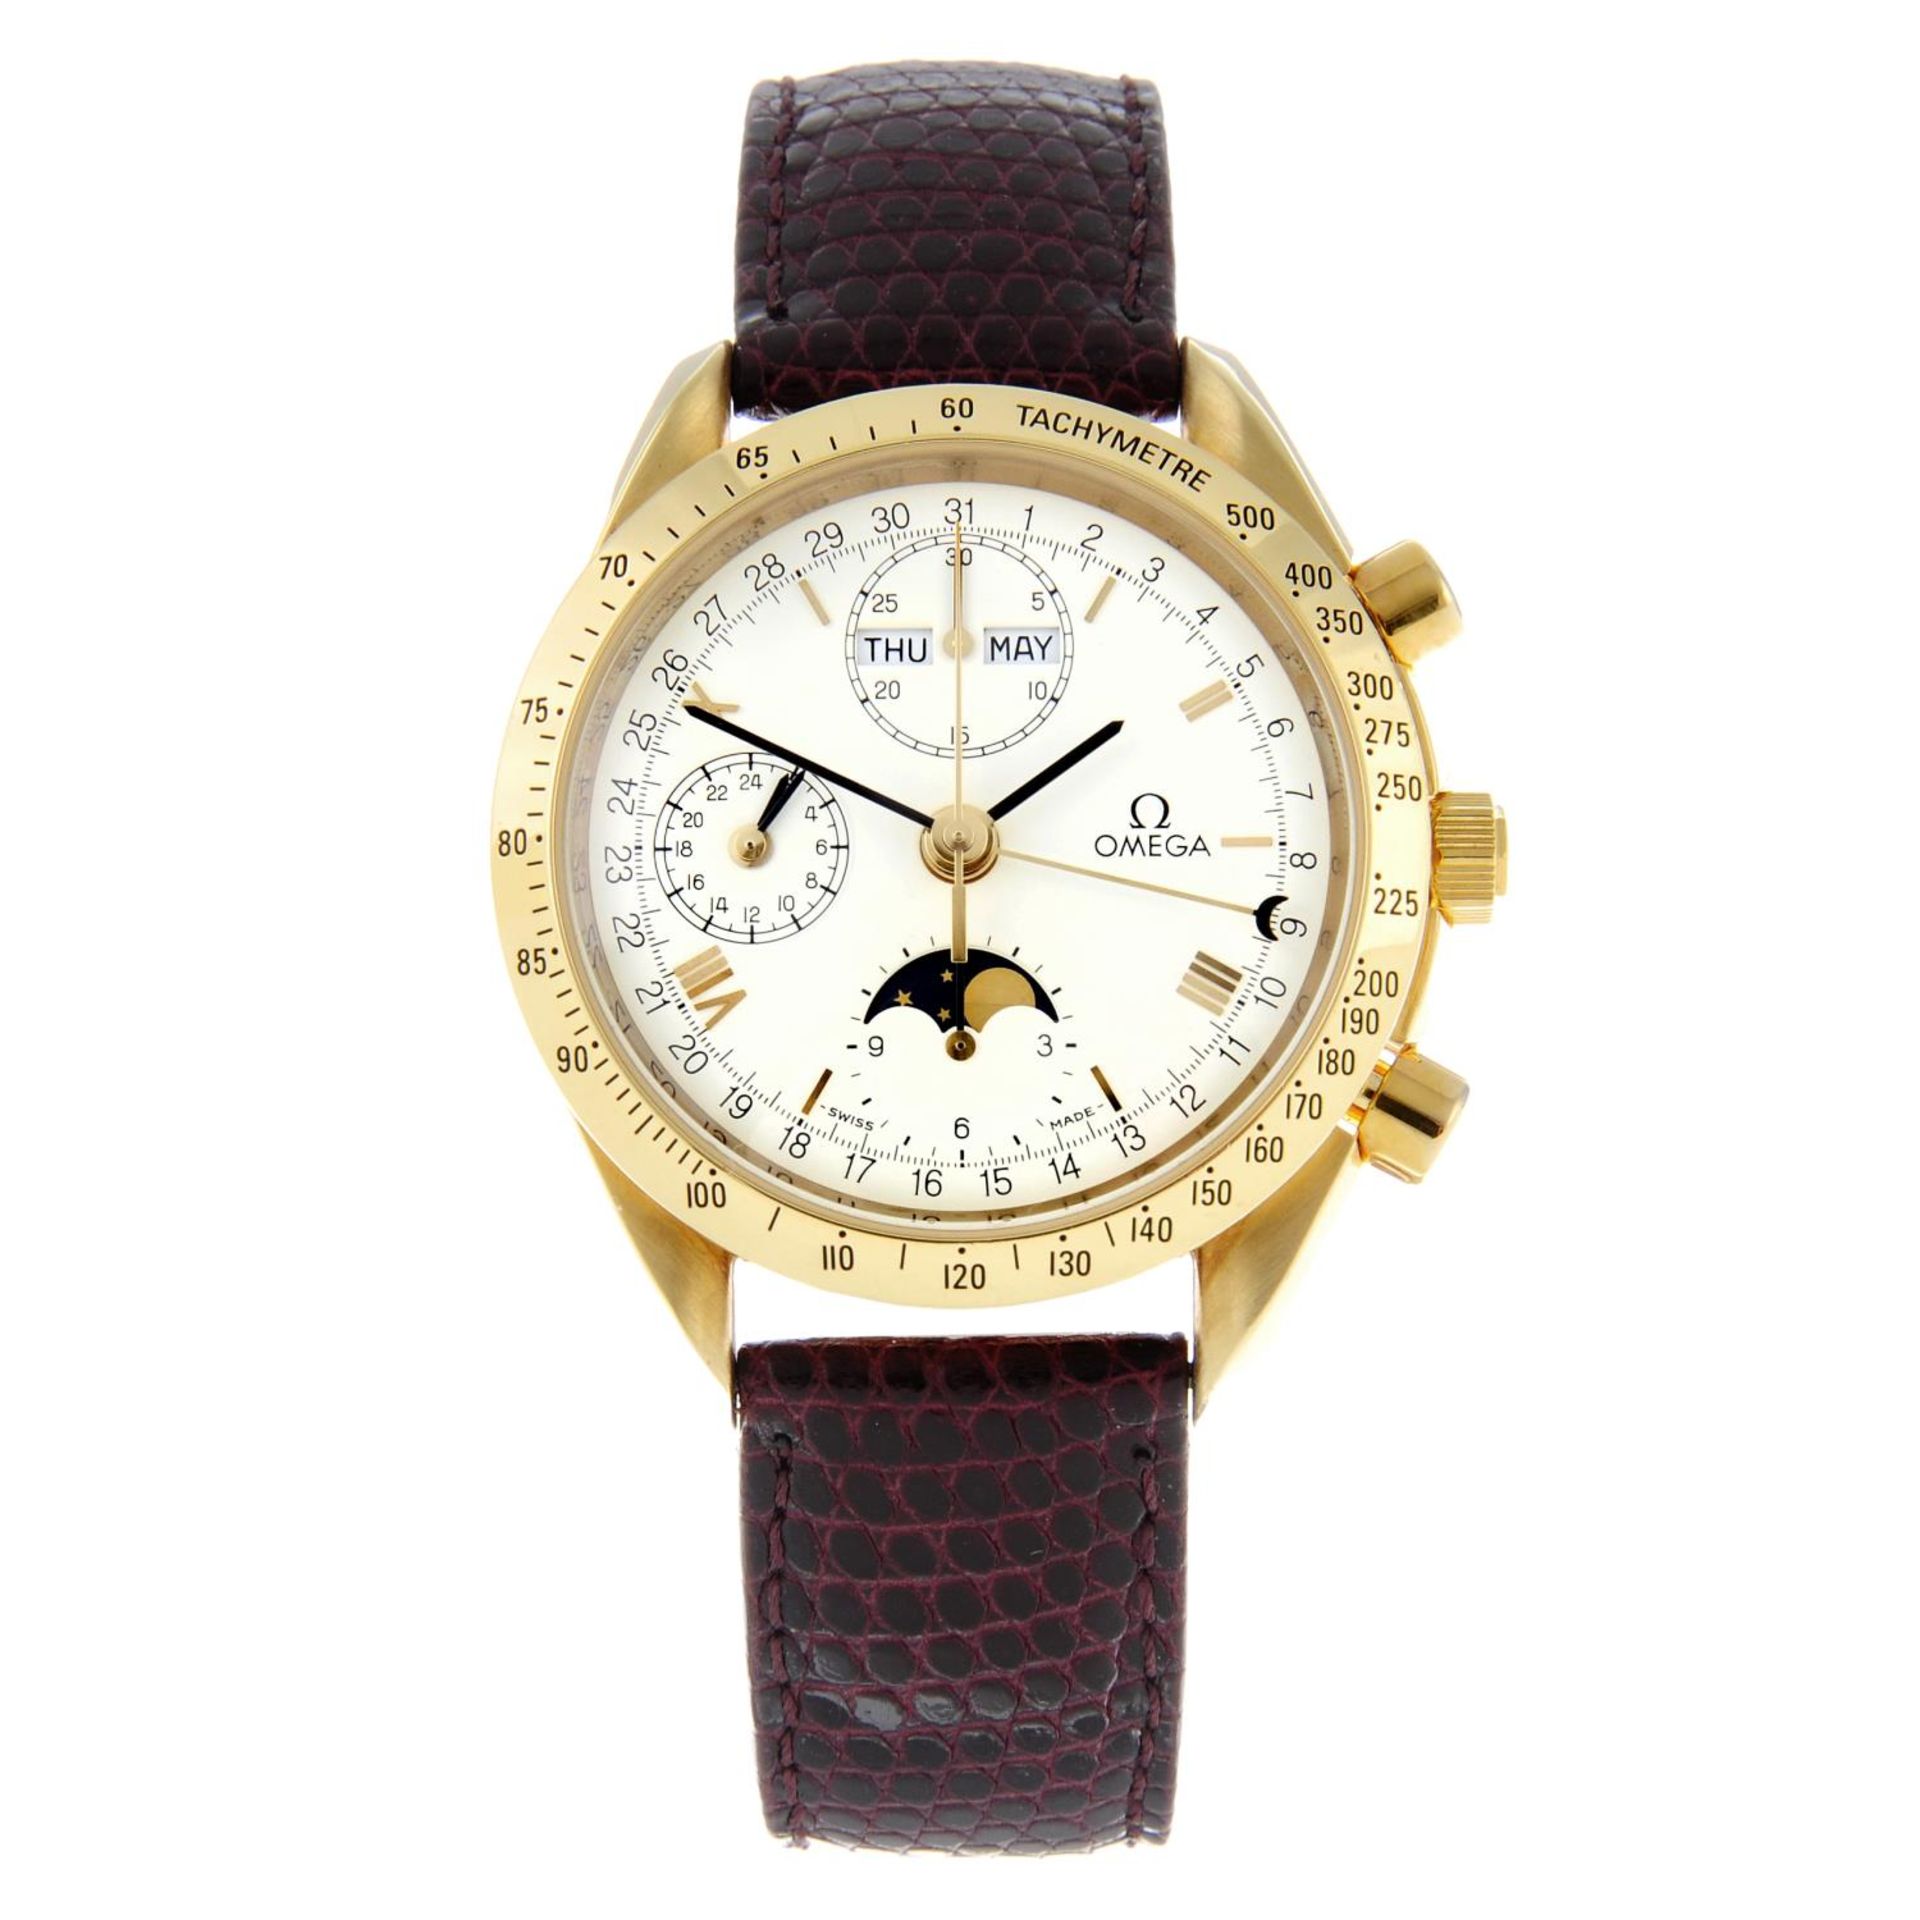 OMEGA - a Speedmaster Moonphase Calendar chronograph wrist watch.